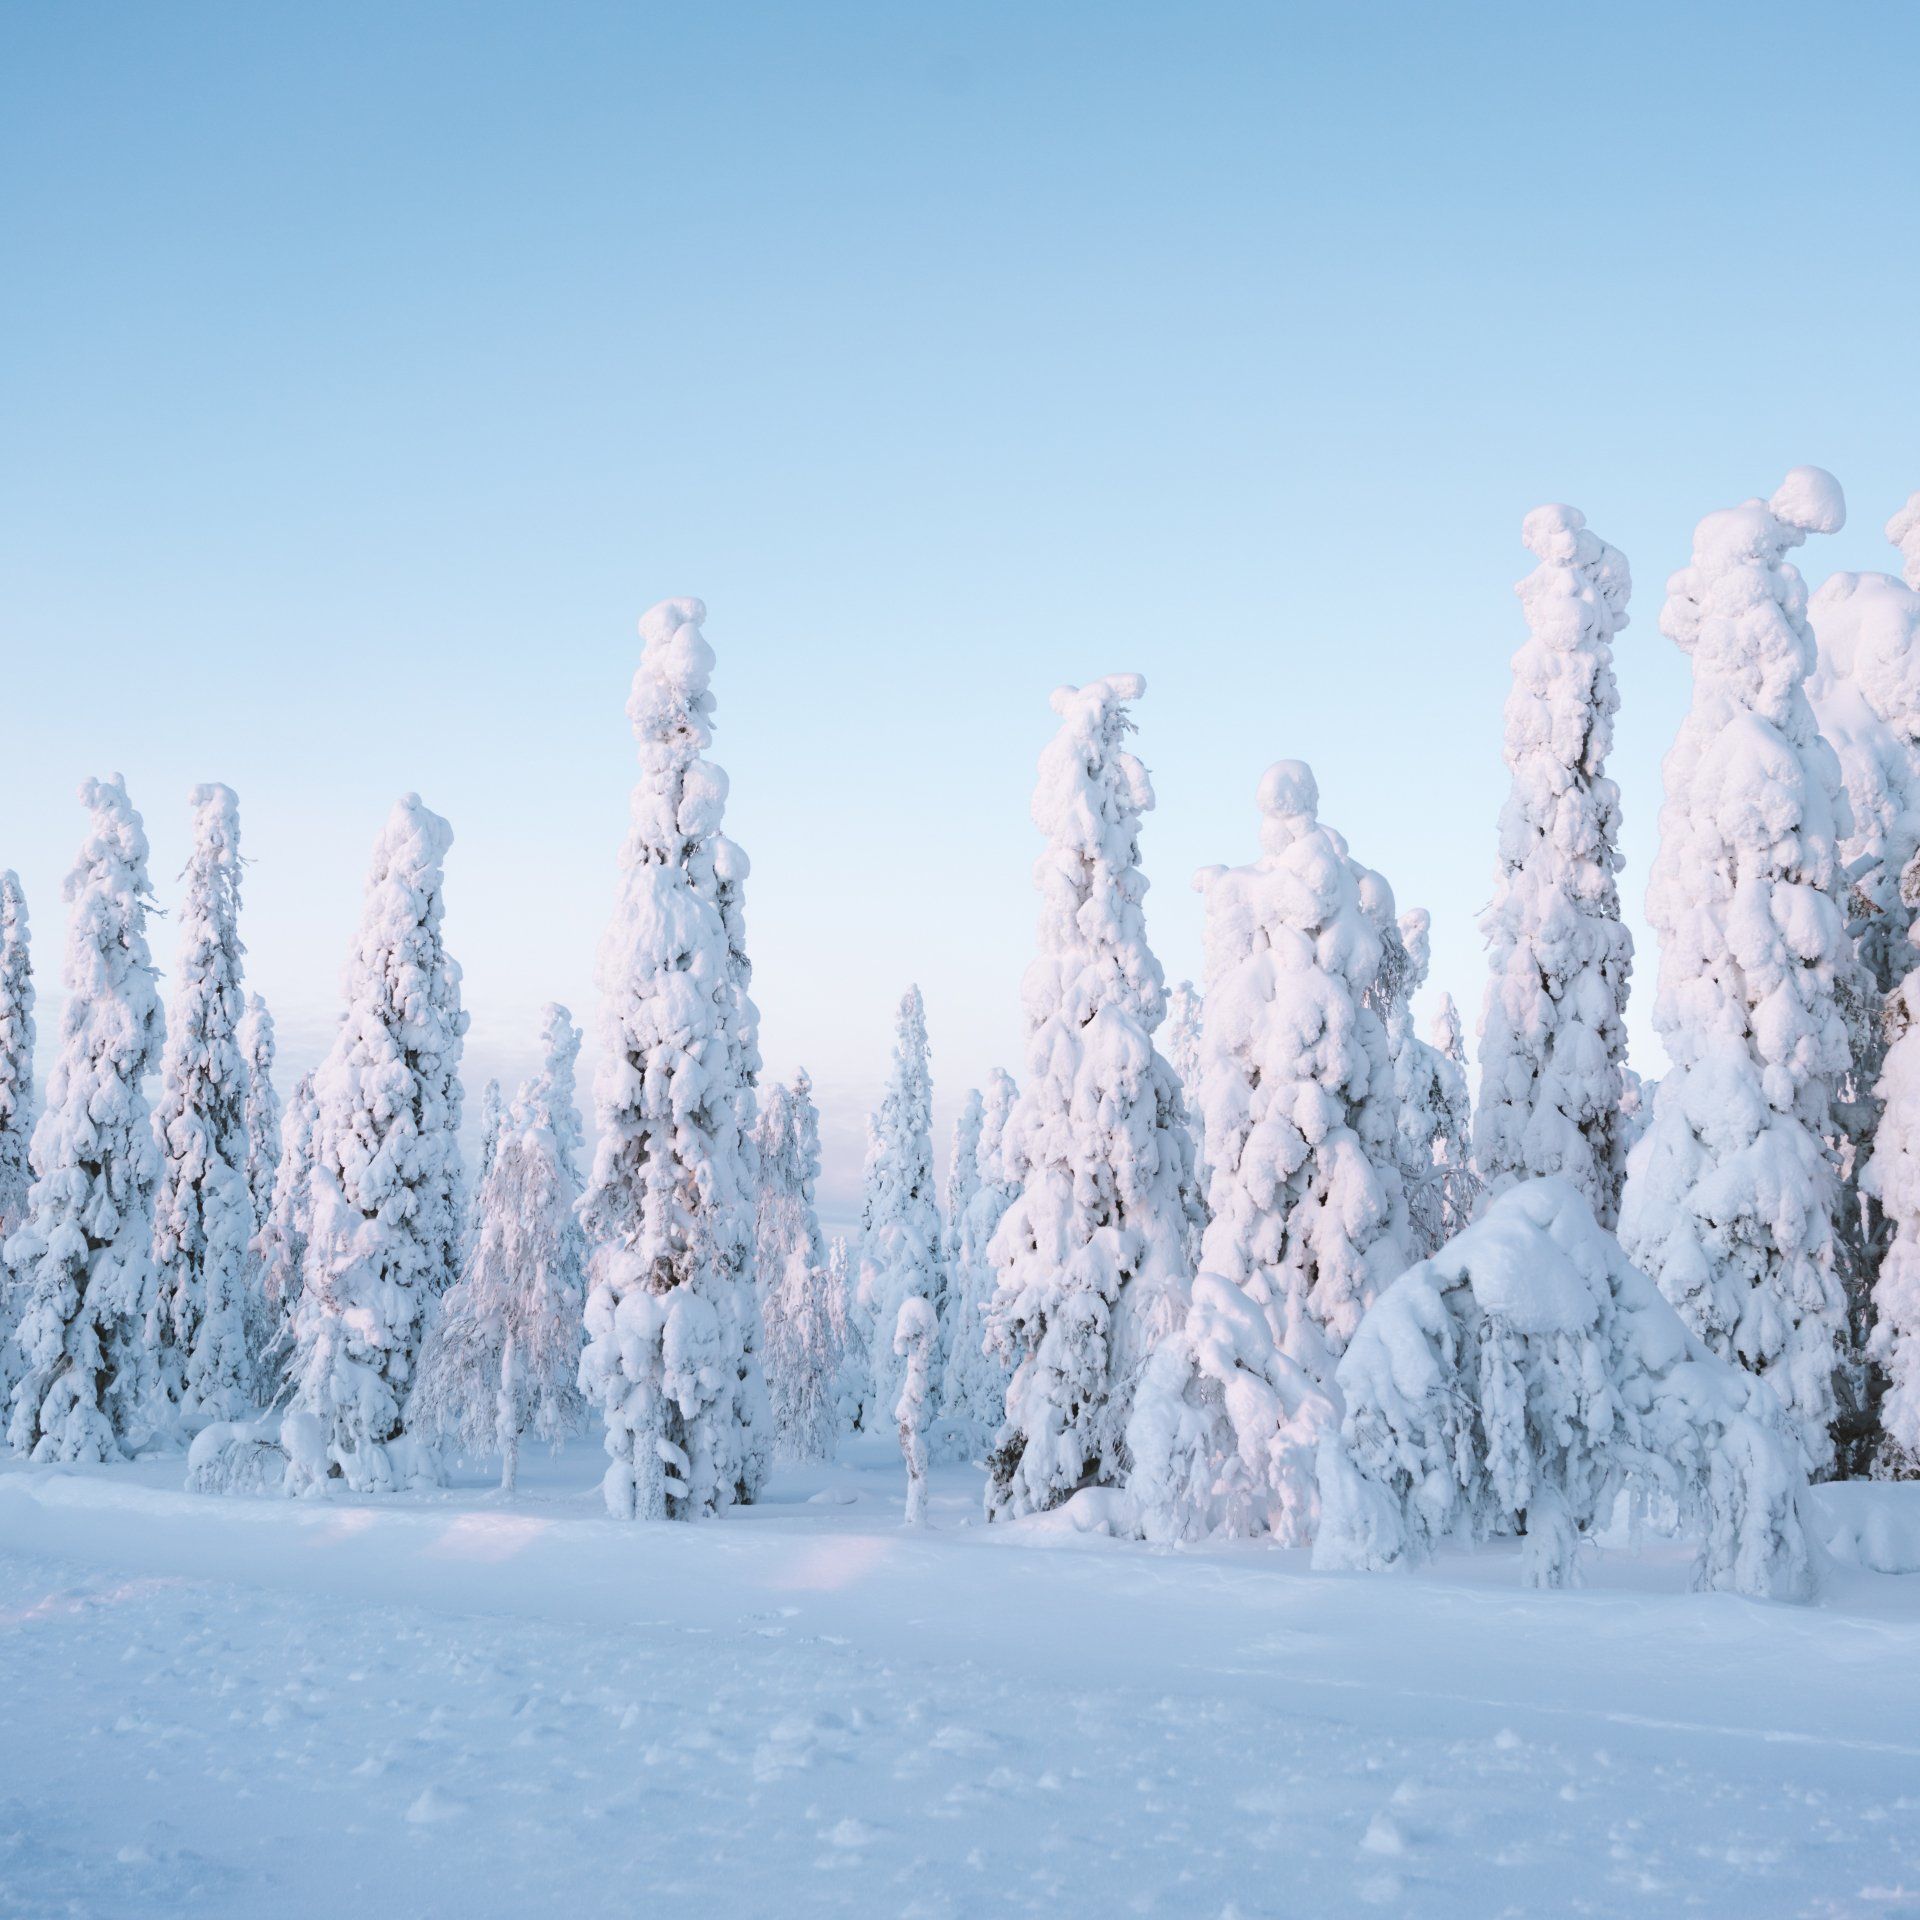 Snow-covered conifers in Finland, a winter wonderland for Gen X adventurers